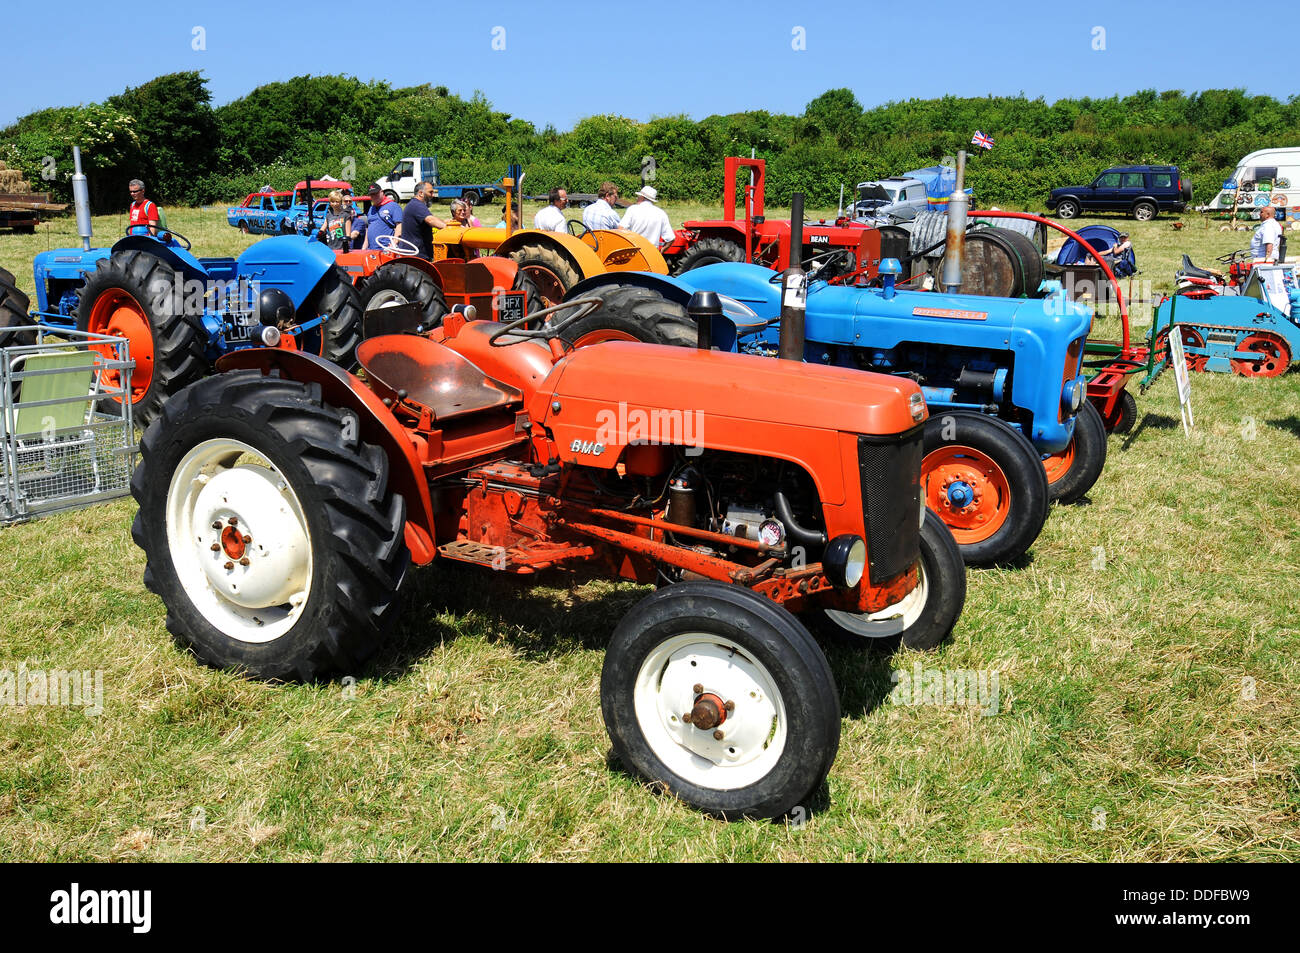 Vintage tractors, classic old tractors on display, England, UK Stock Photo